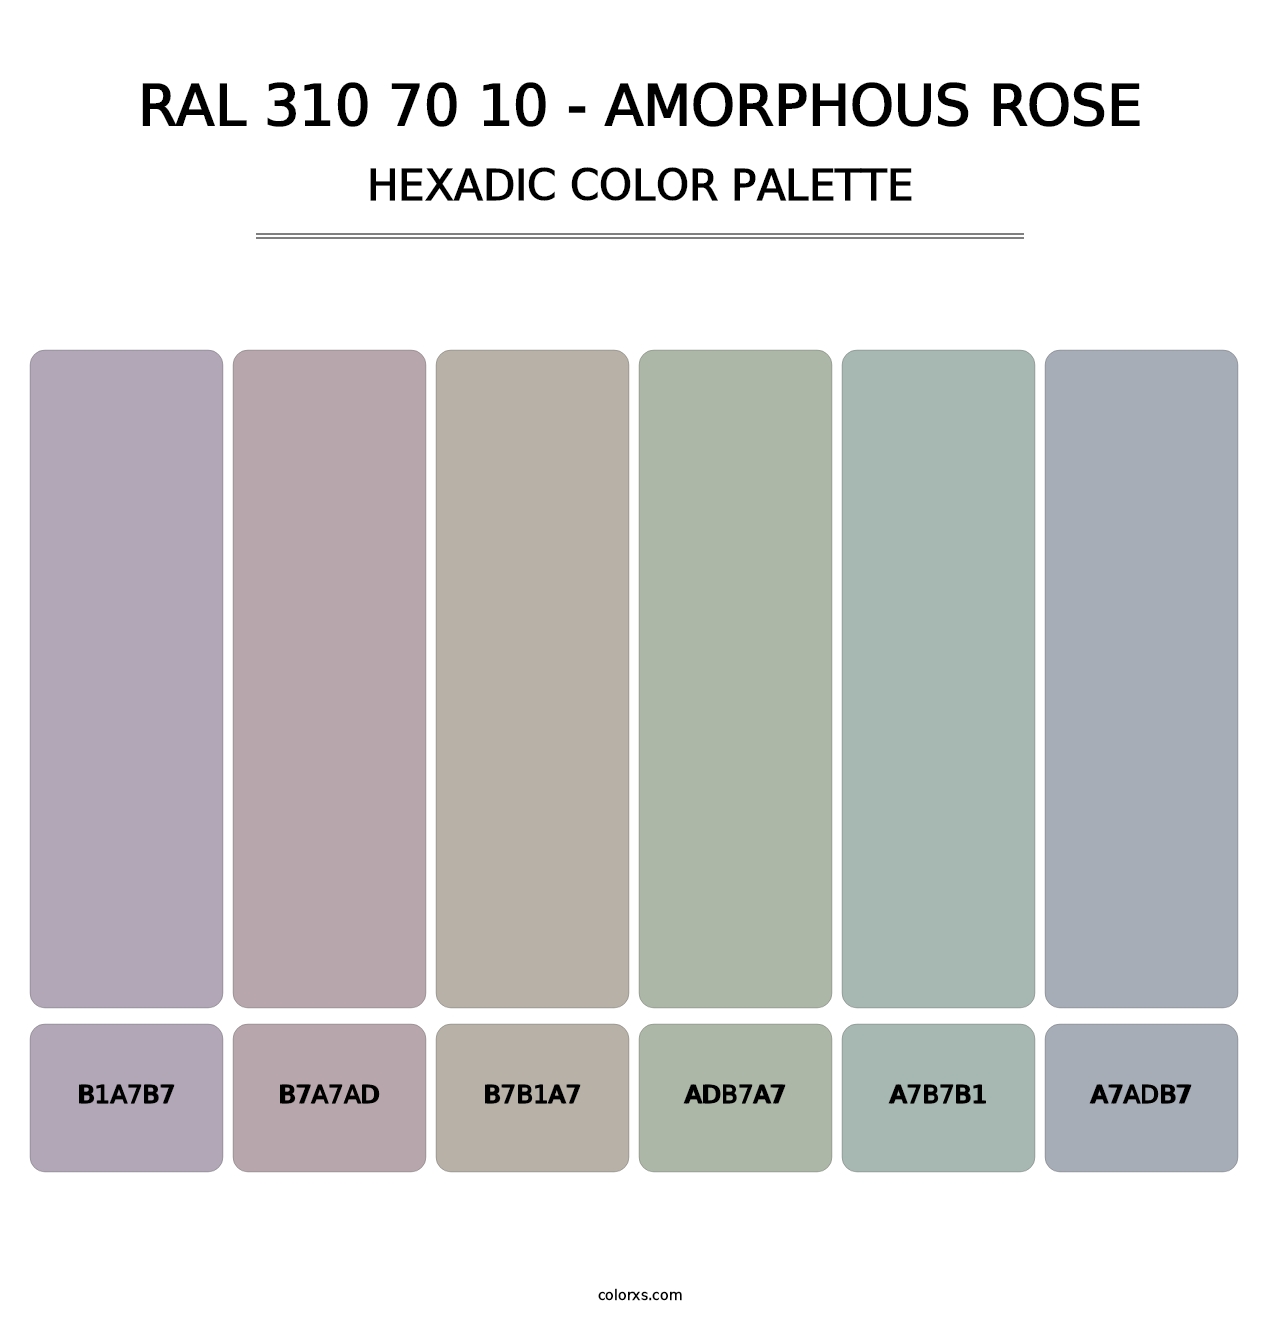 RAL 310 70 10 - Amorphous Rose - Hexadic Color Palette